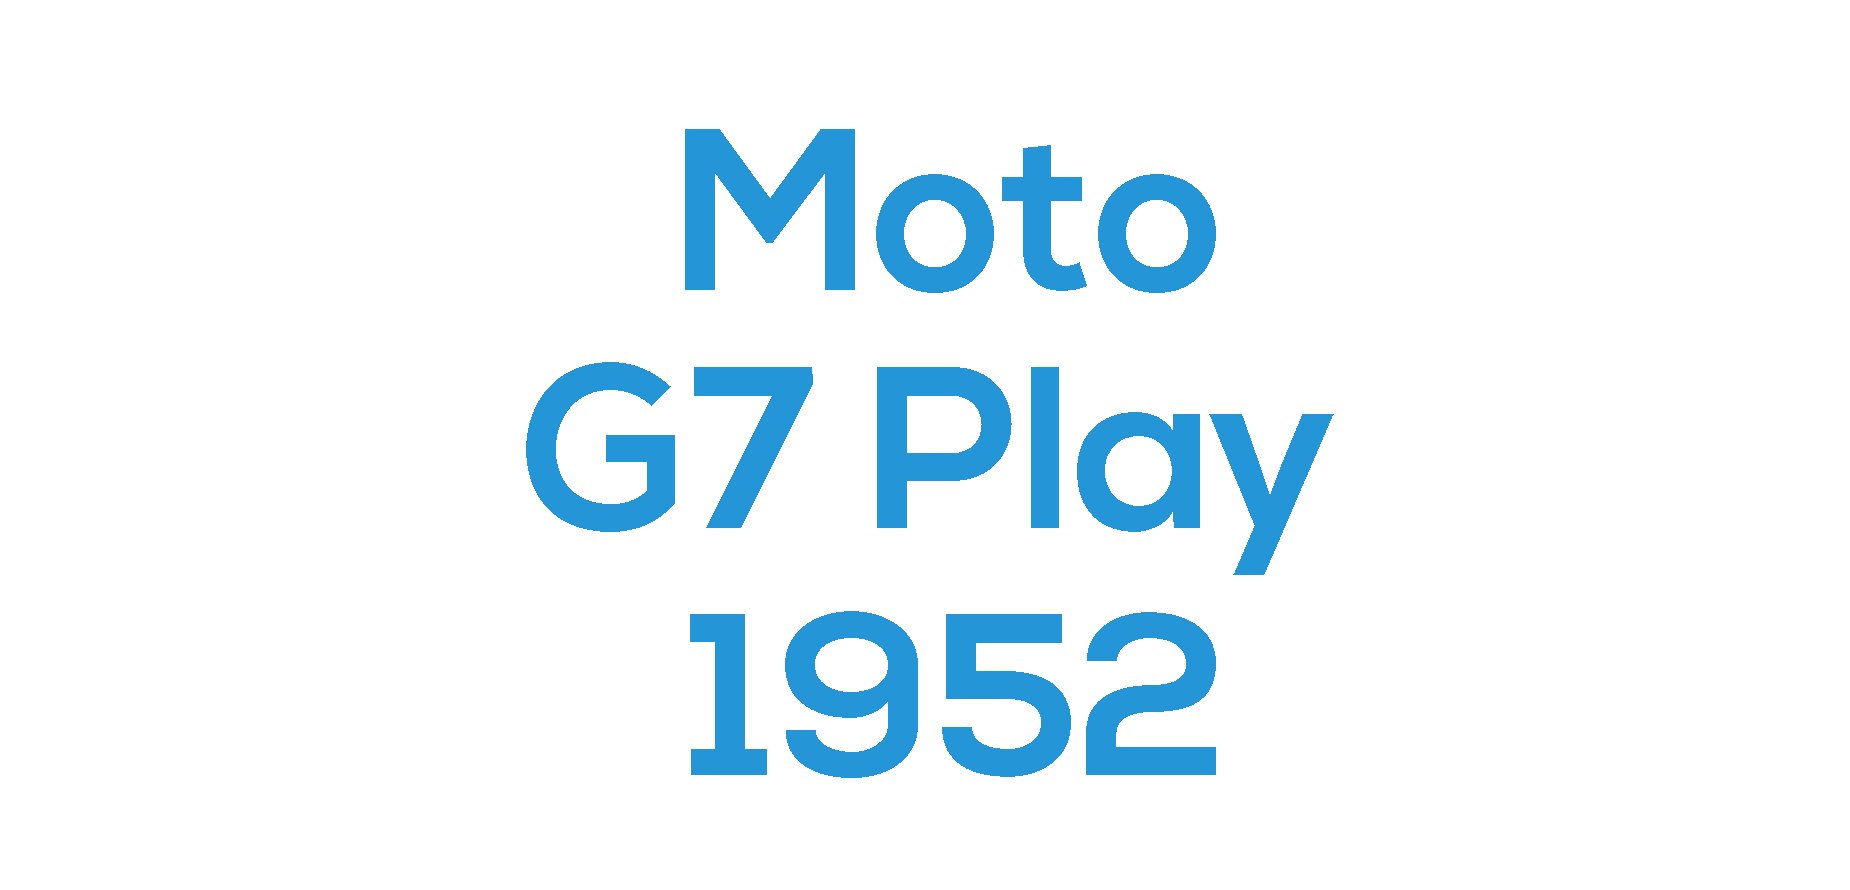 G7 Play 2019 (XT1952)